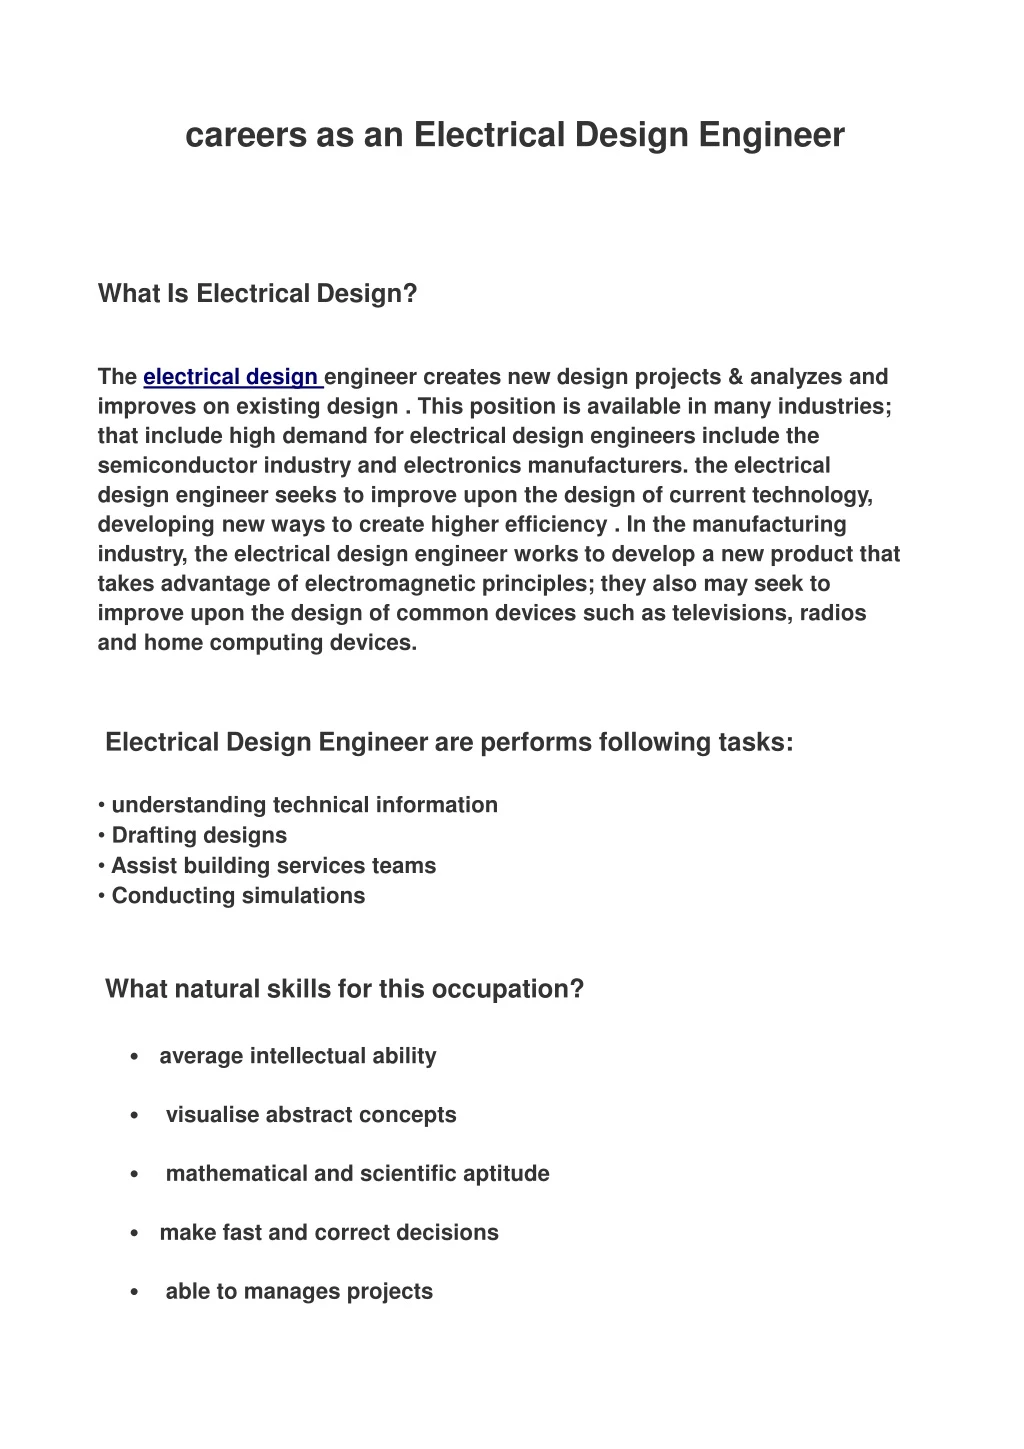 careers as an electrical design engineer